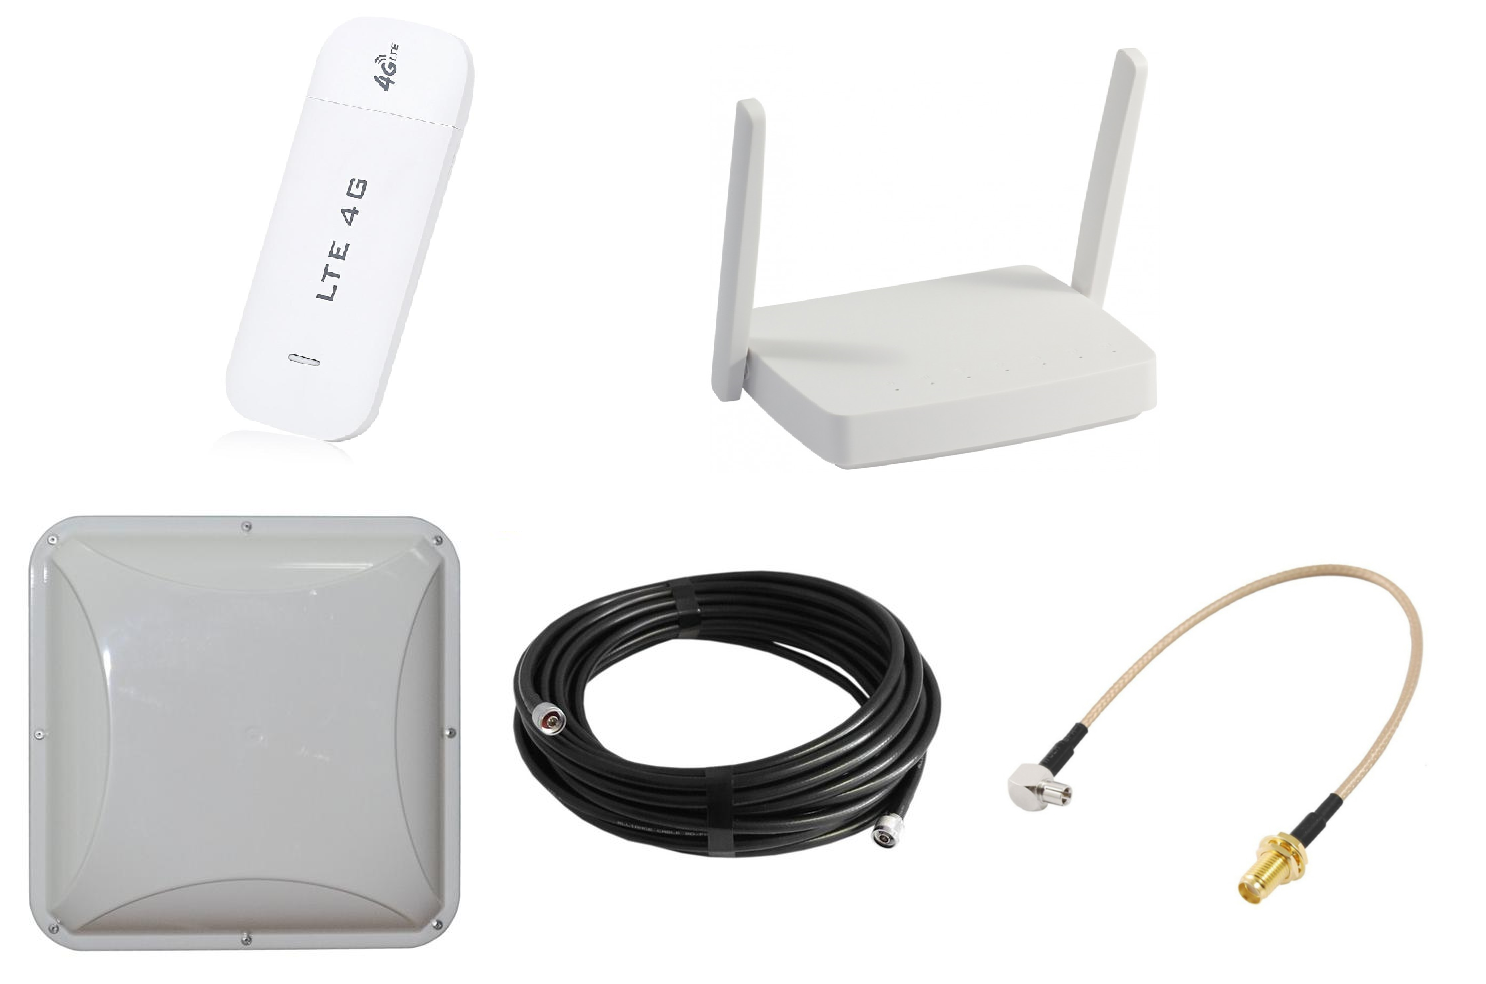 Комплект 4g роутер. Антенна комнатная VEGATEL Ant-700/2700-Pi (Тип а). GSM модем 3g/4g/LTE. 4g USB-модем, Wi-Fi-роутер. USB 4g модем с внешней антенной.